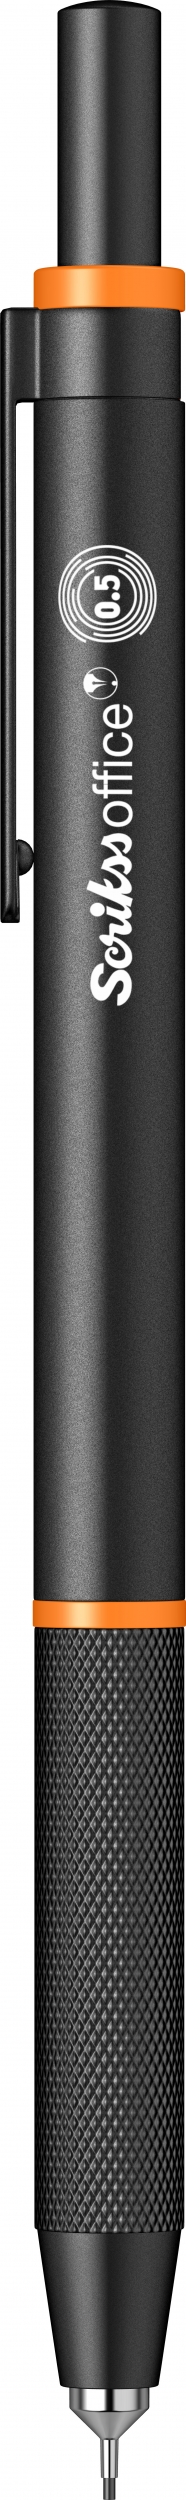 Механичен молив Twist Scrikss 0,5мм., модел 87470, Оранжев